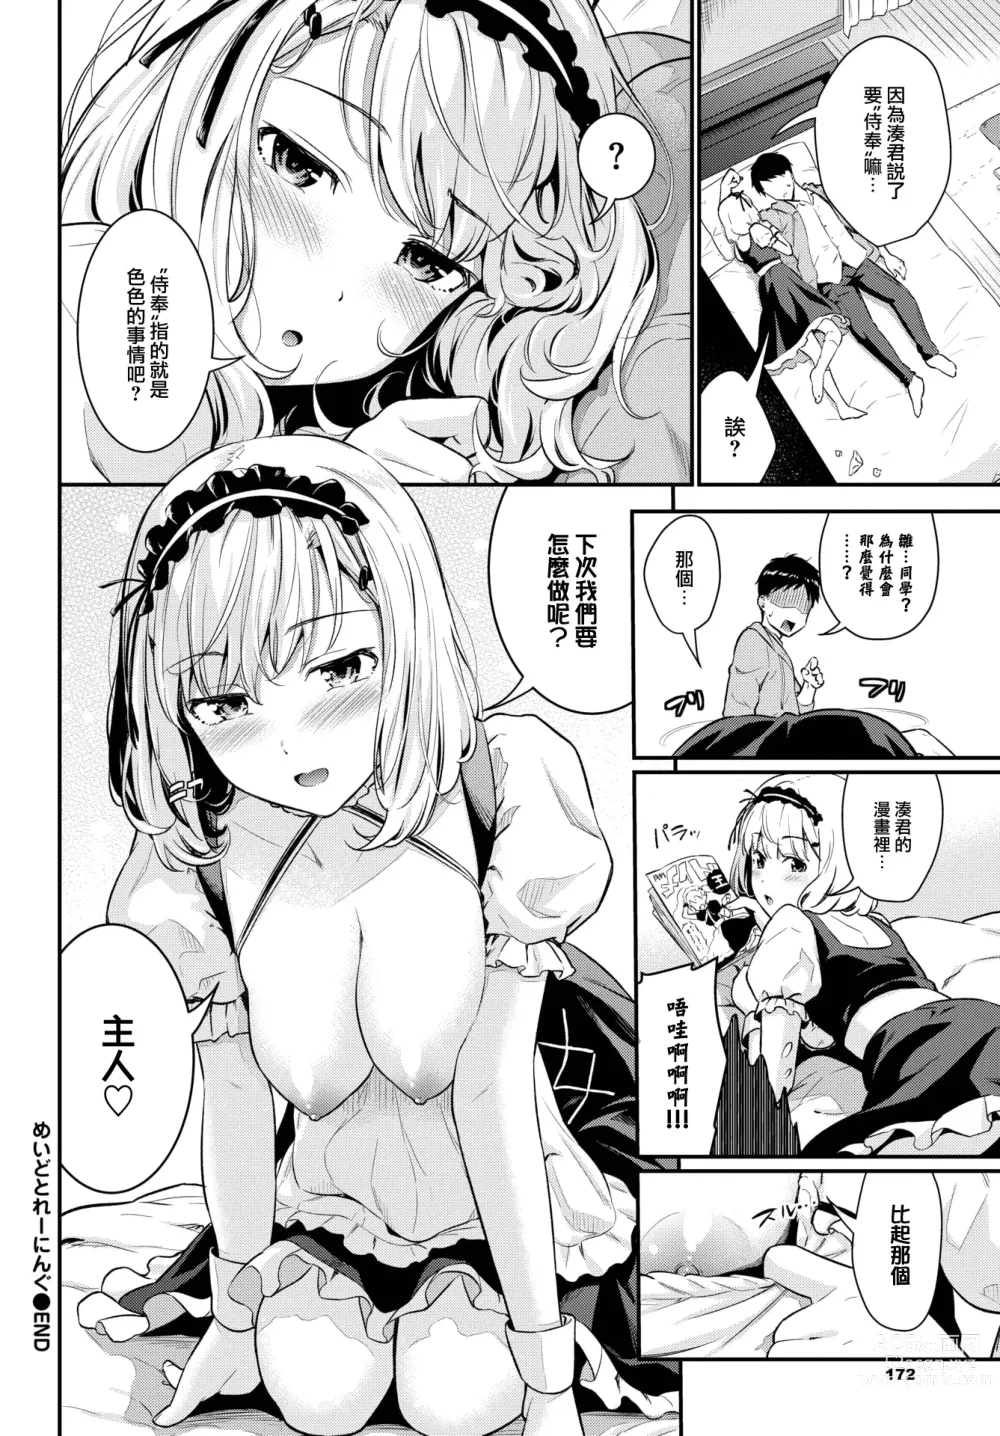 Page 21 of manga Maid Training